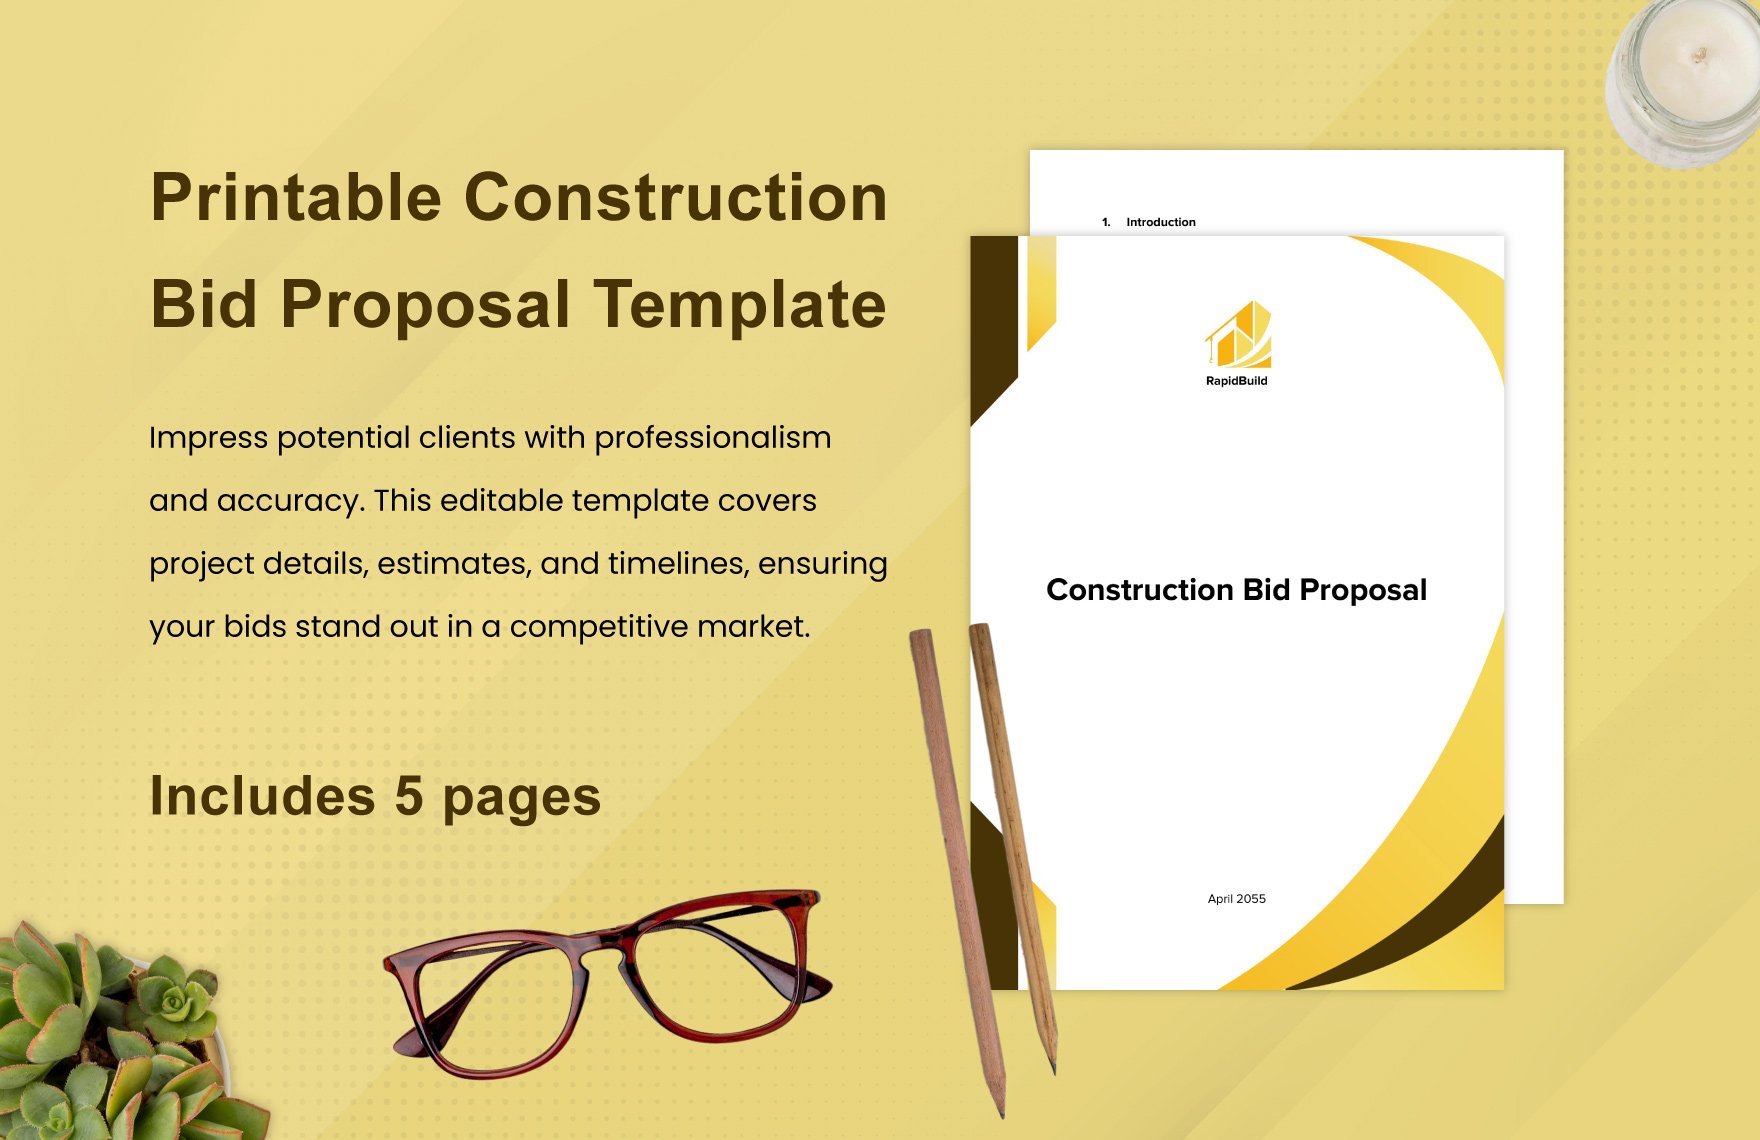 Printable Construction Bid Proposal Template